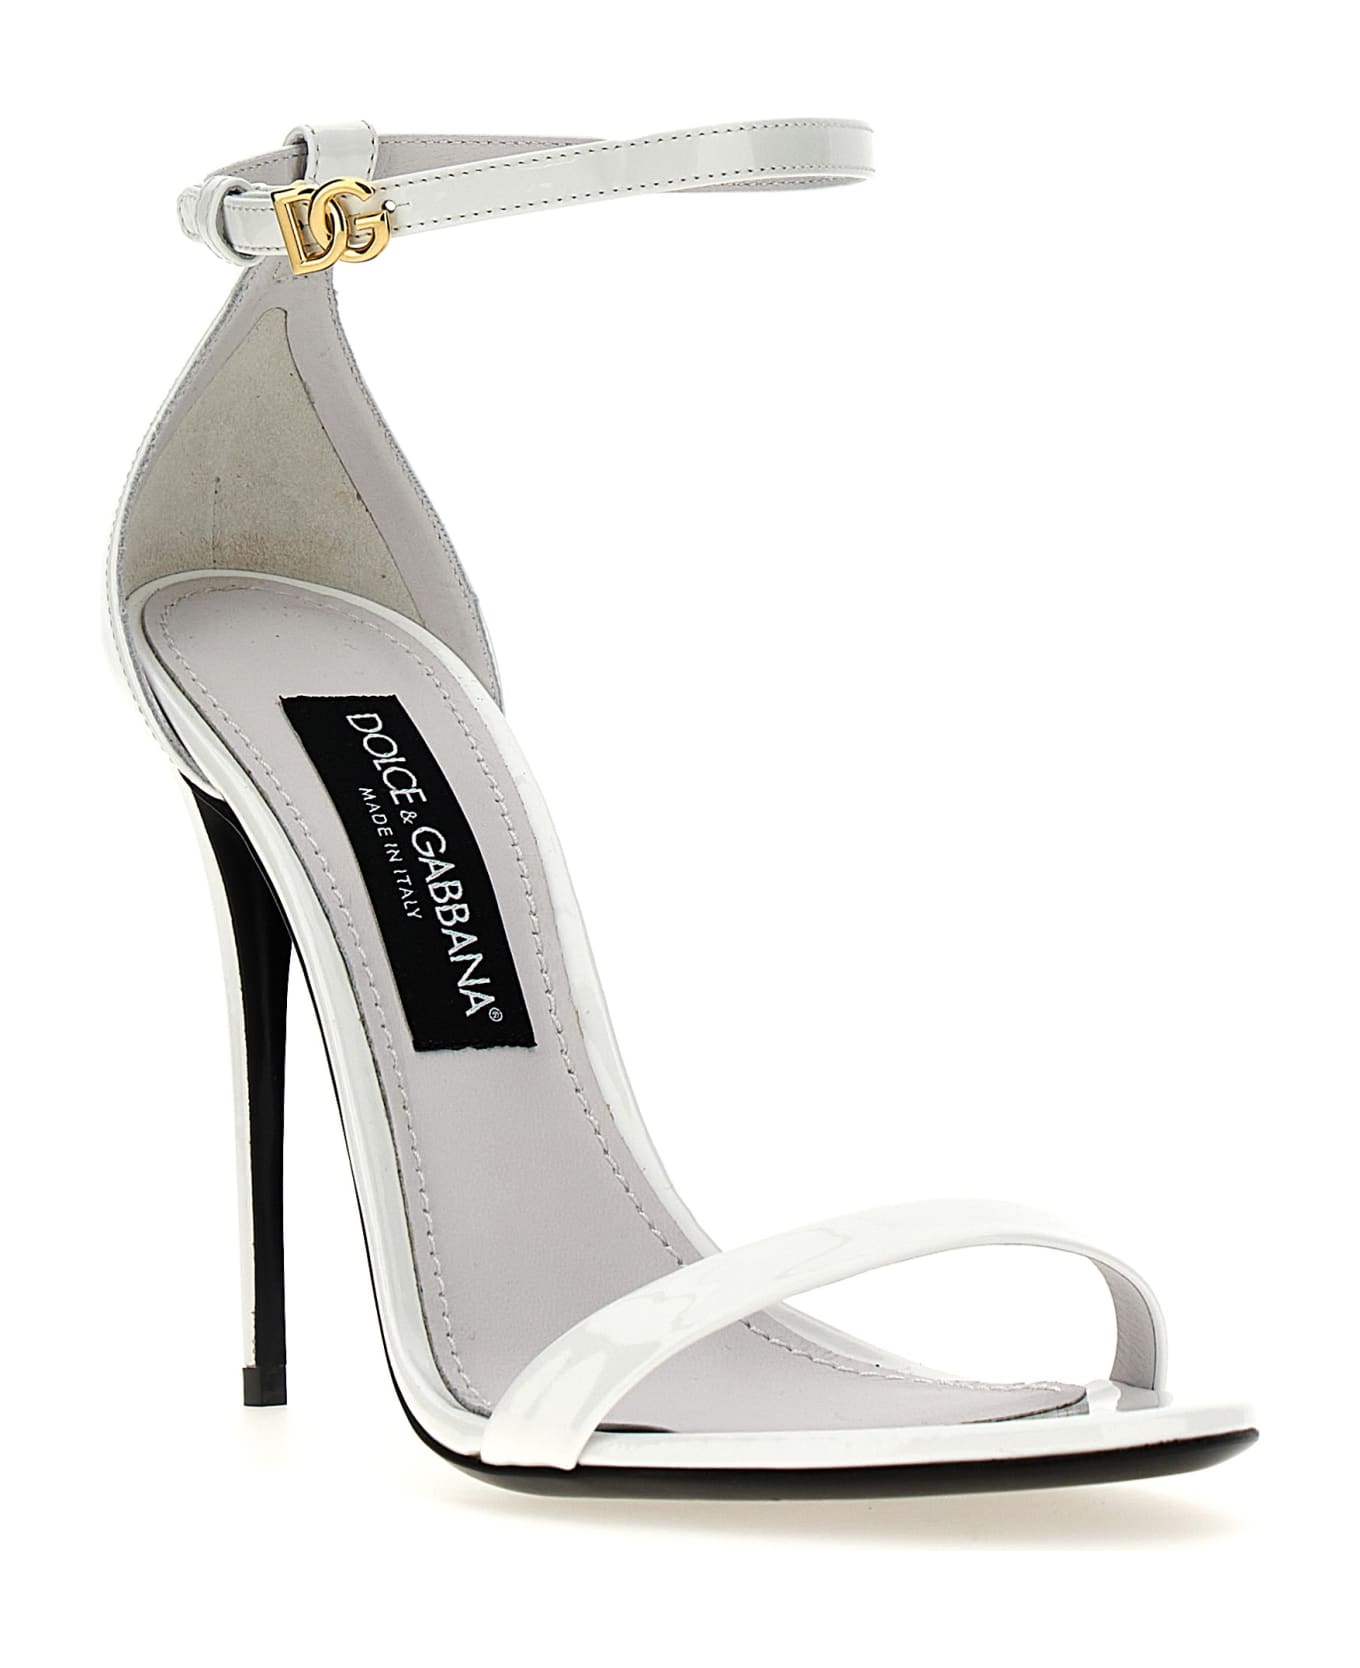 Dolce & Gabbana Patent Leather Sandals - White サンダル